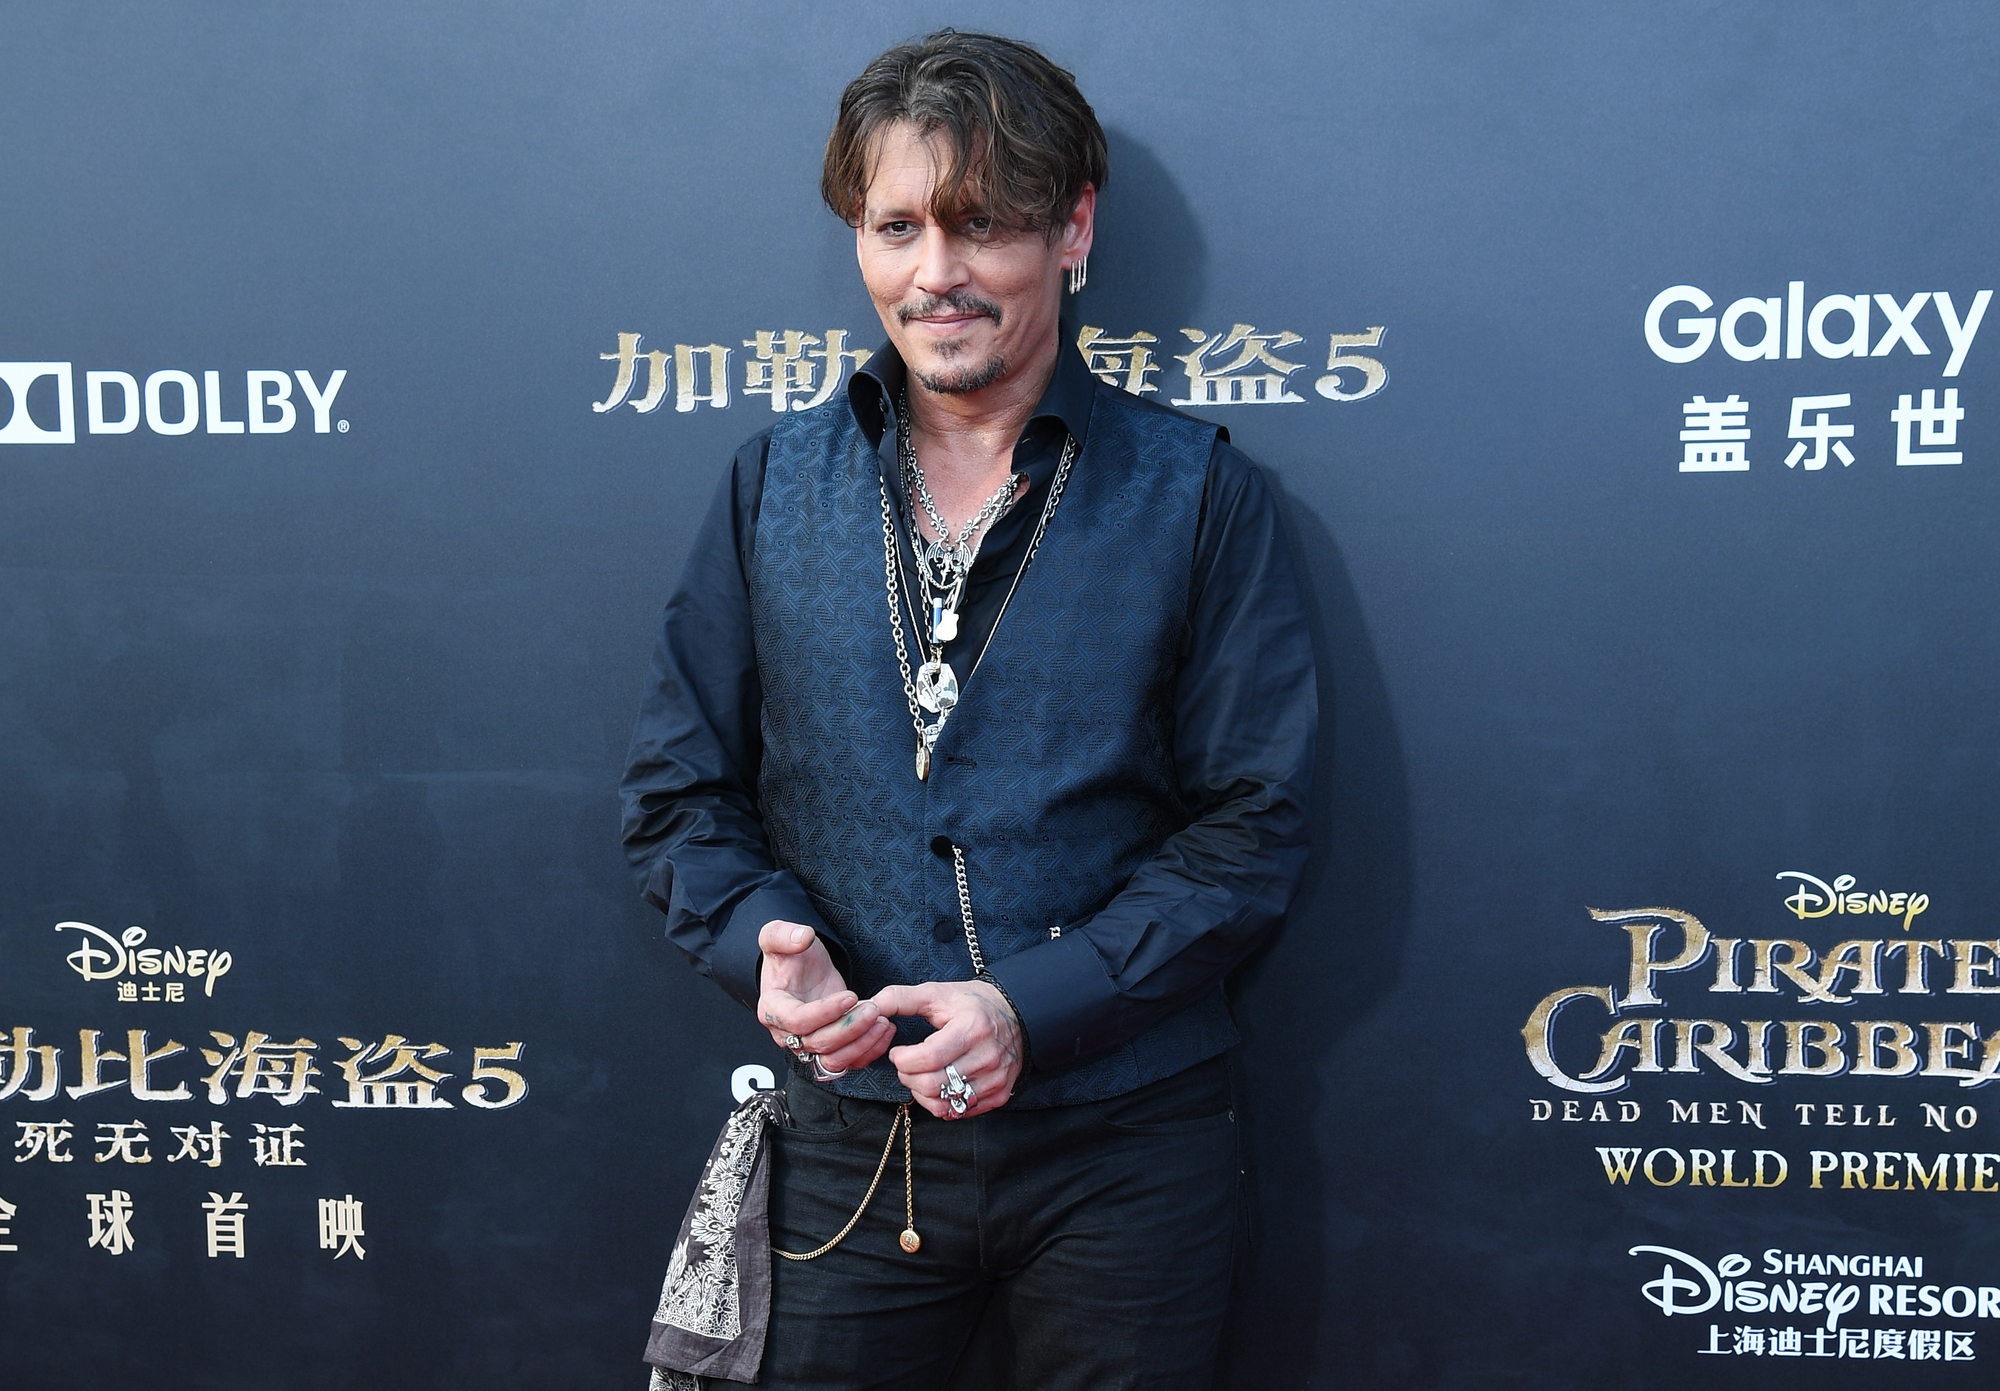 Gefallene Hollywood-Legende - So wohnte Johnny Depp